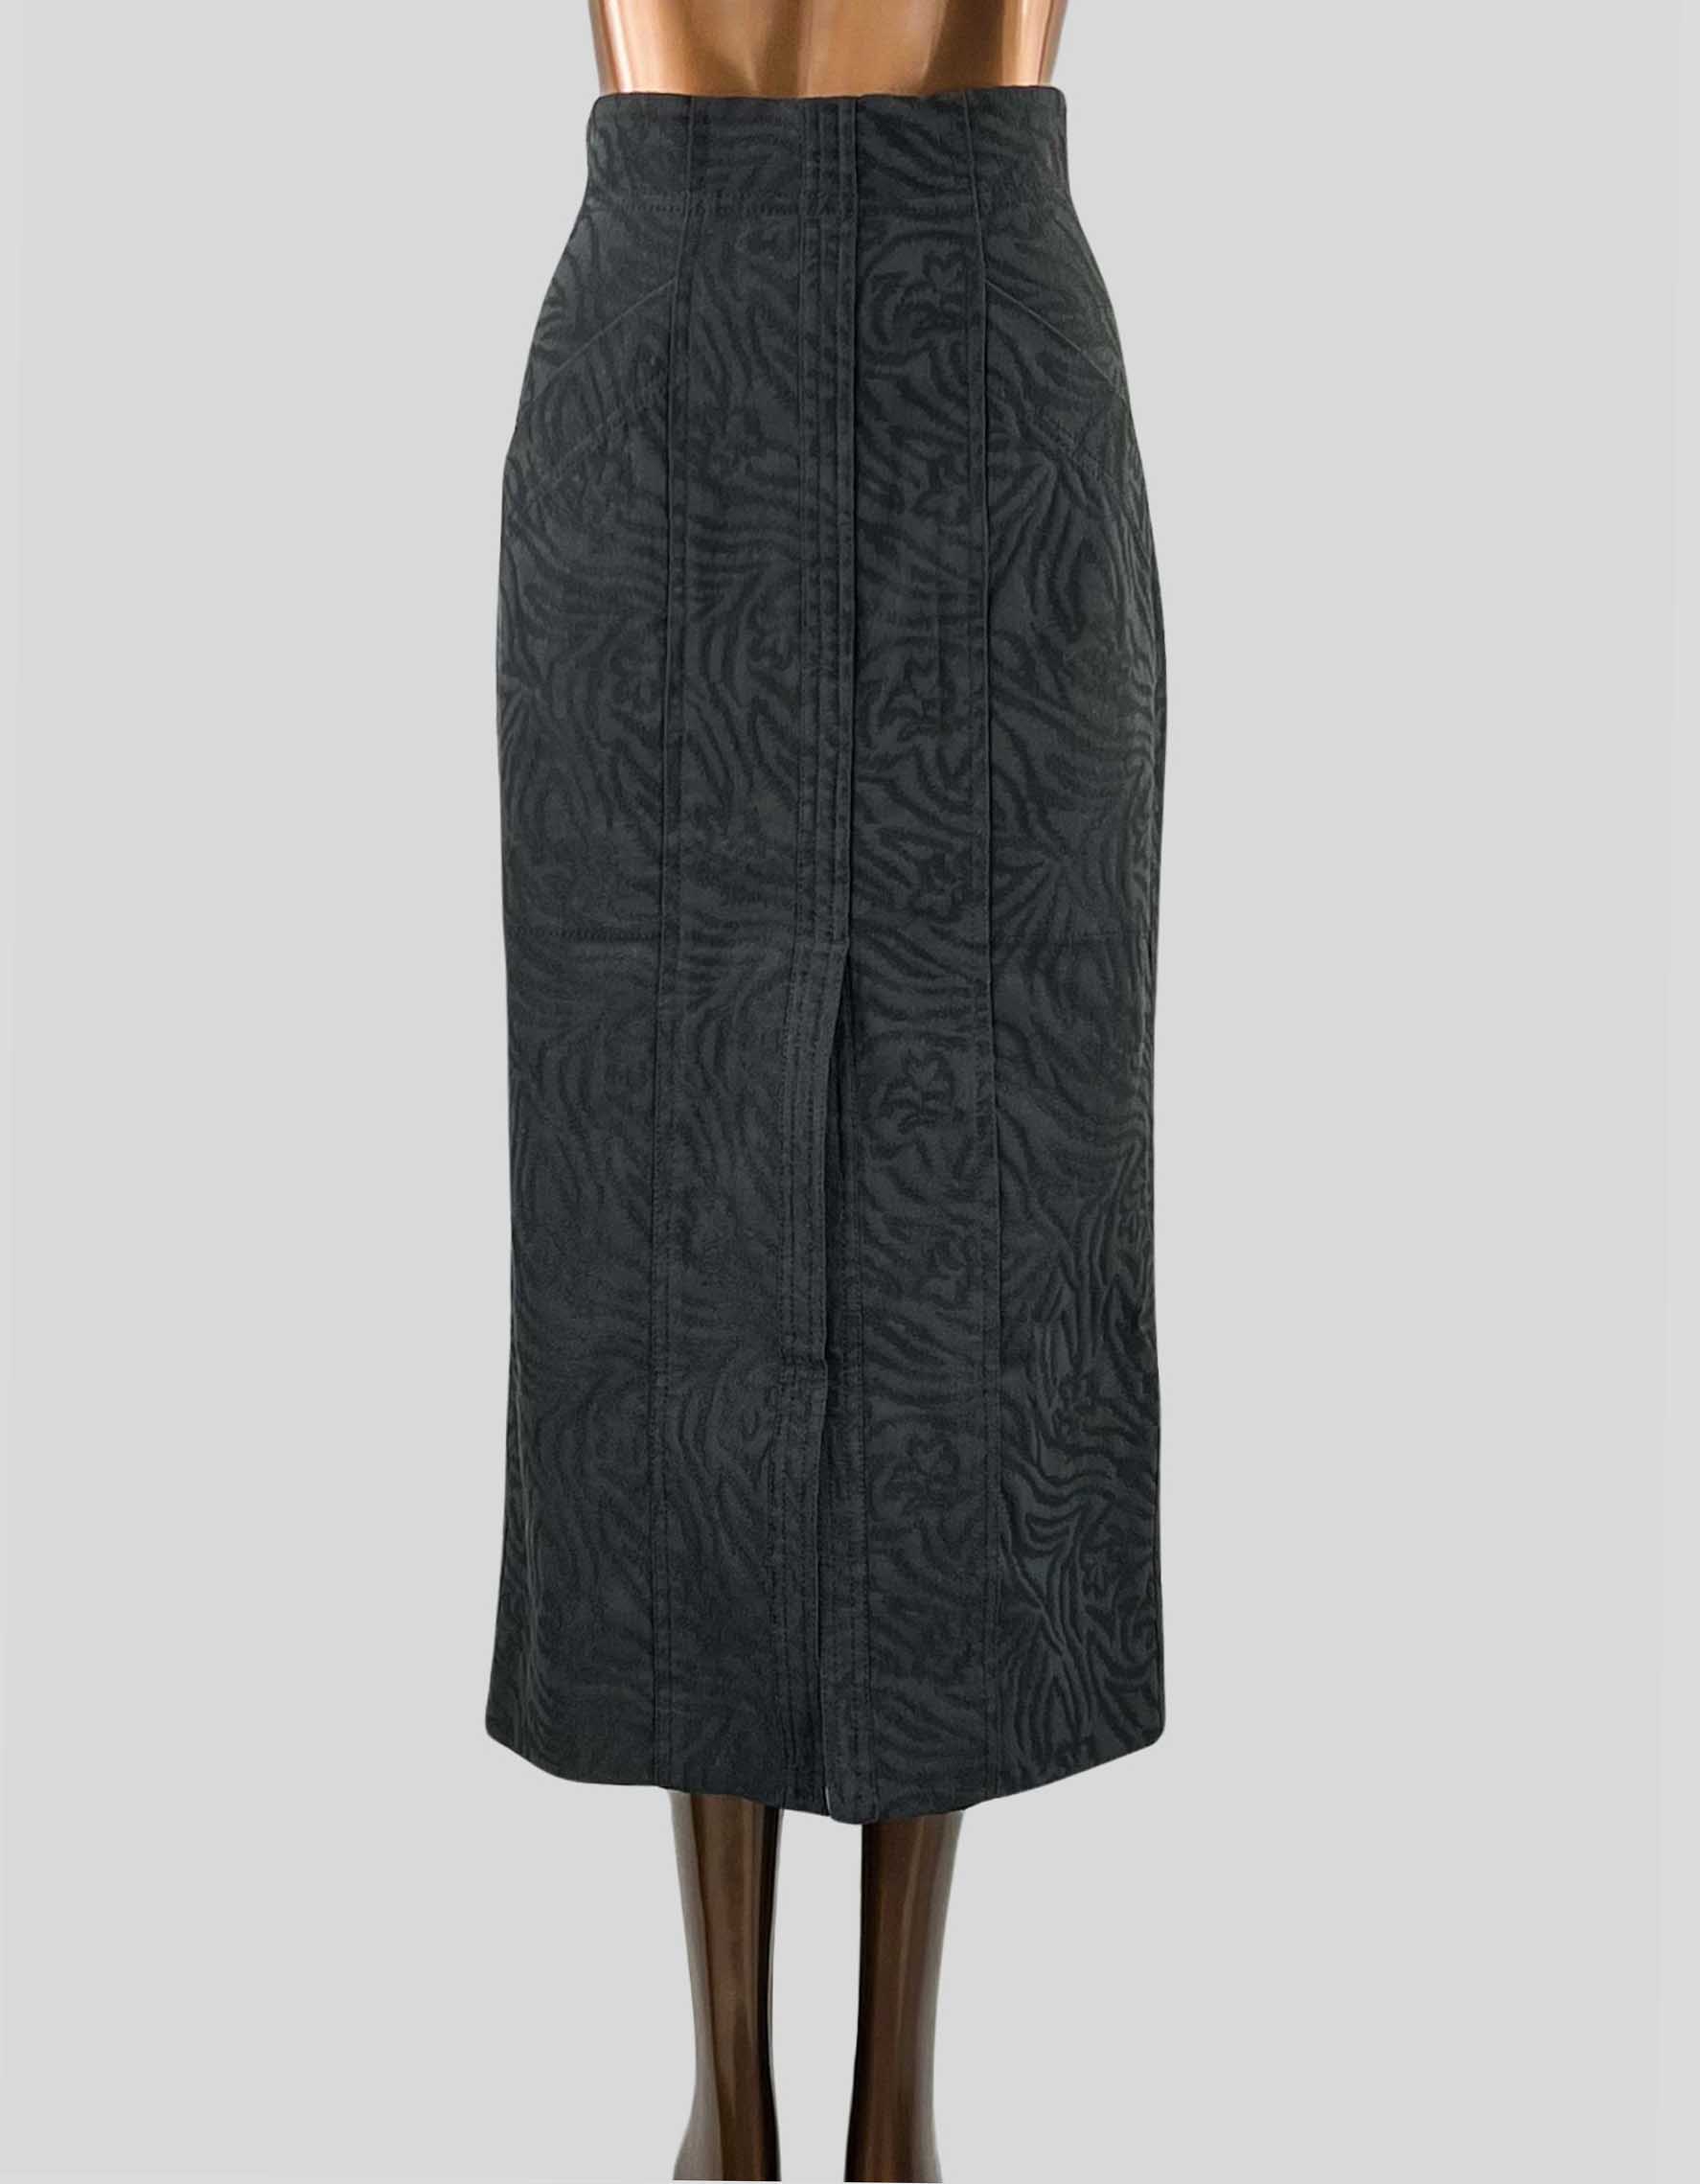 Rebecca Taylor Zebra Fleur Skirt in a straight midi length silhouette with front center slit.